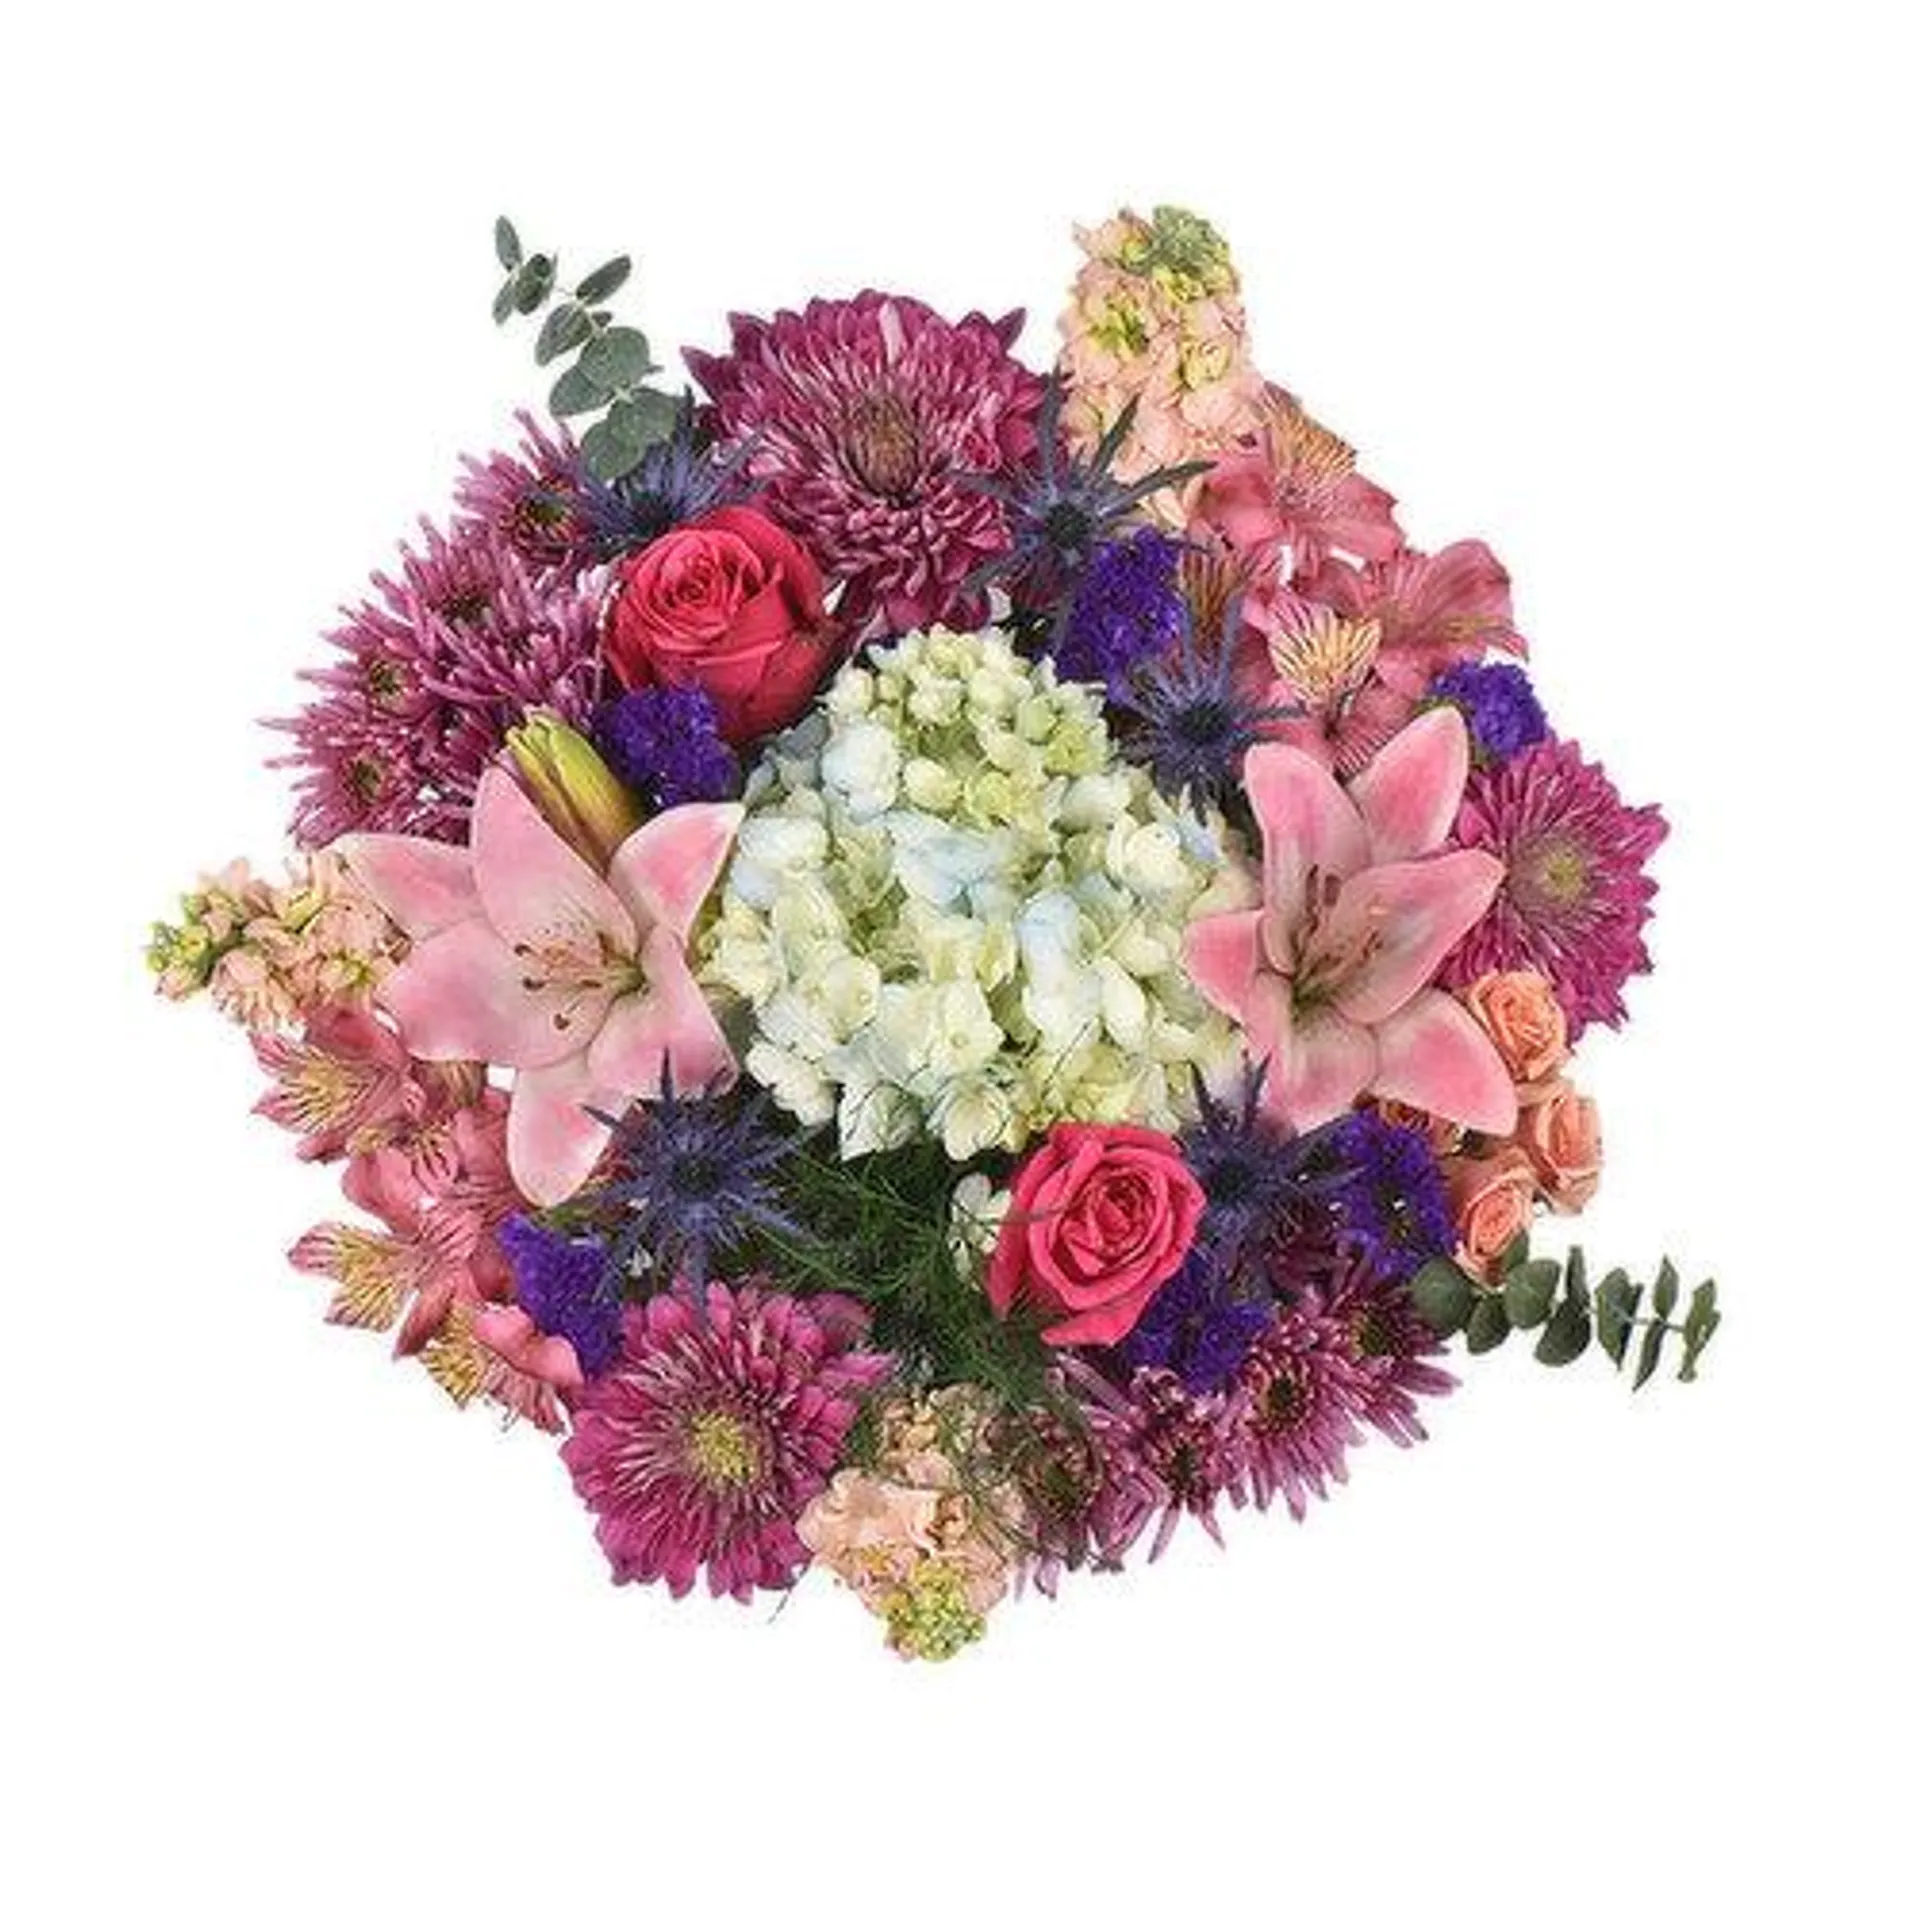 Fresh Luxury Flores Mixed Flower Bouquet - 1 Each